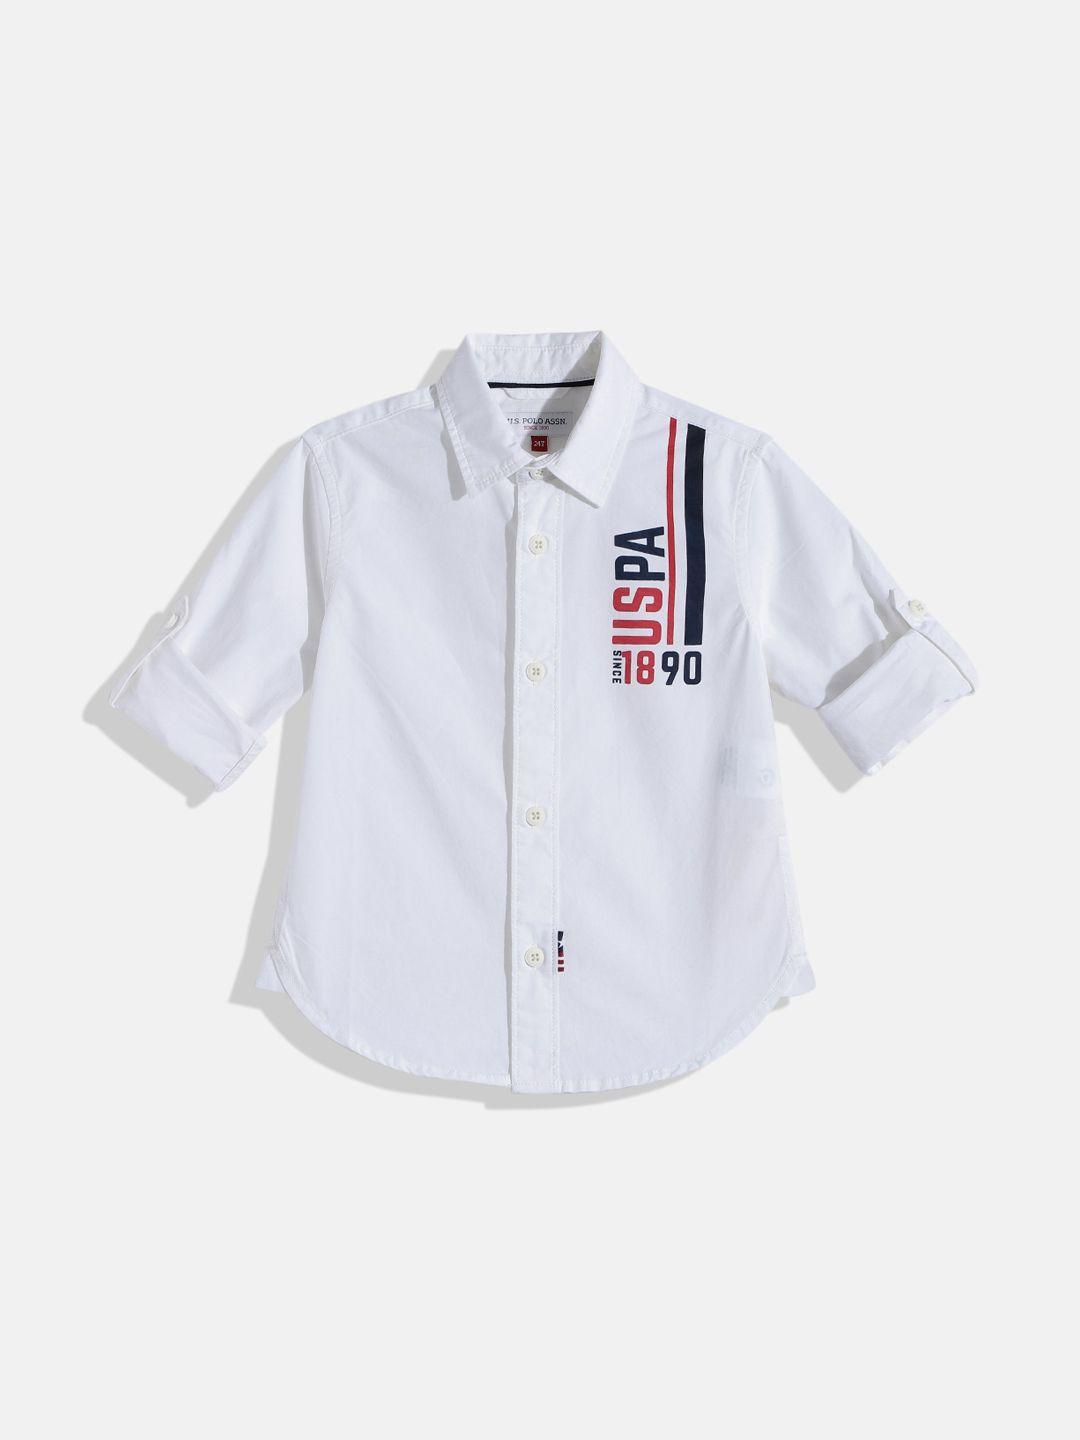 u.s. polo assn. kids  boys white brand logo printed pure cotton casual shirt